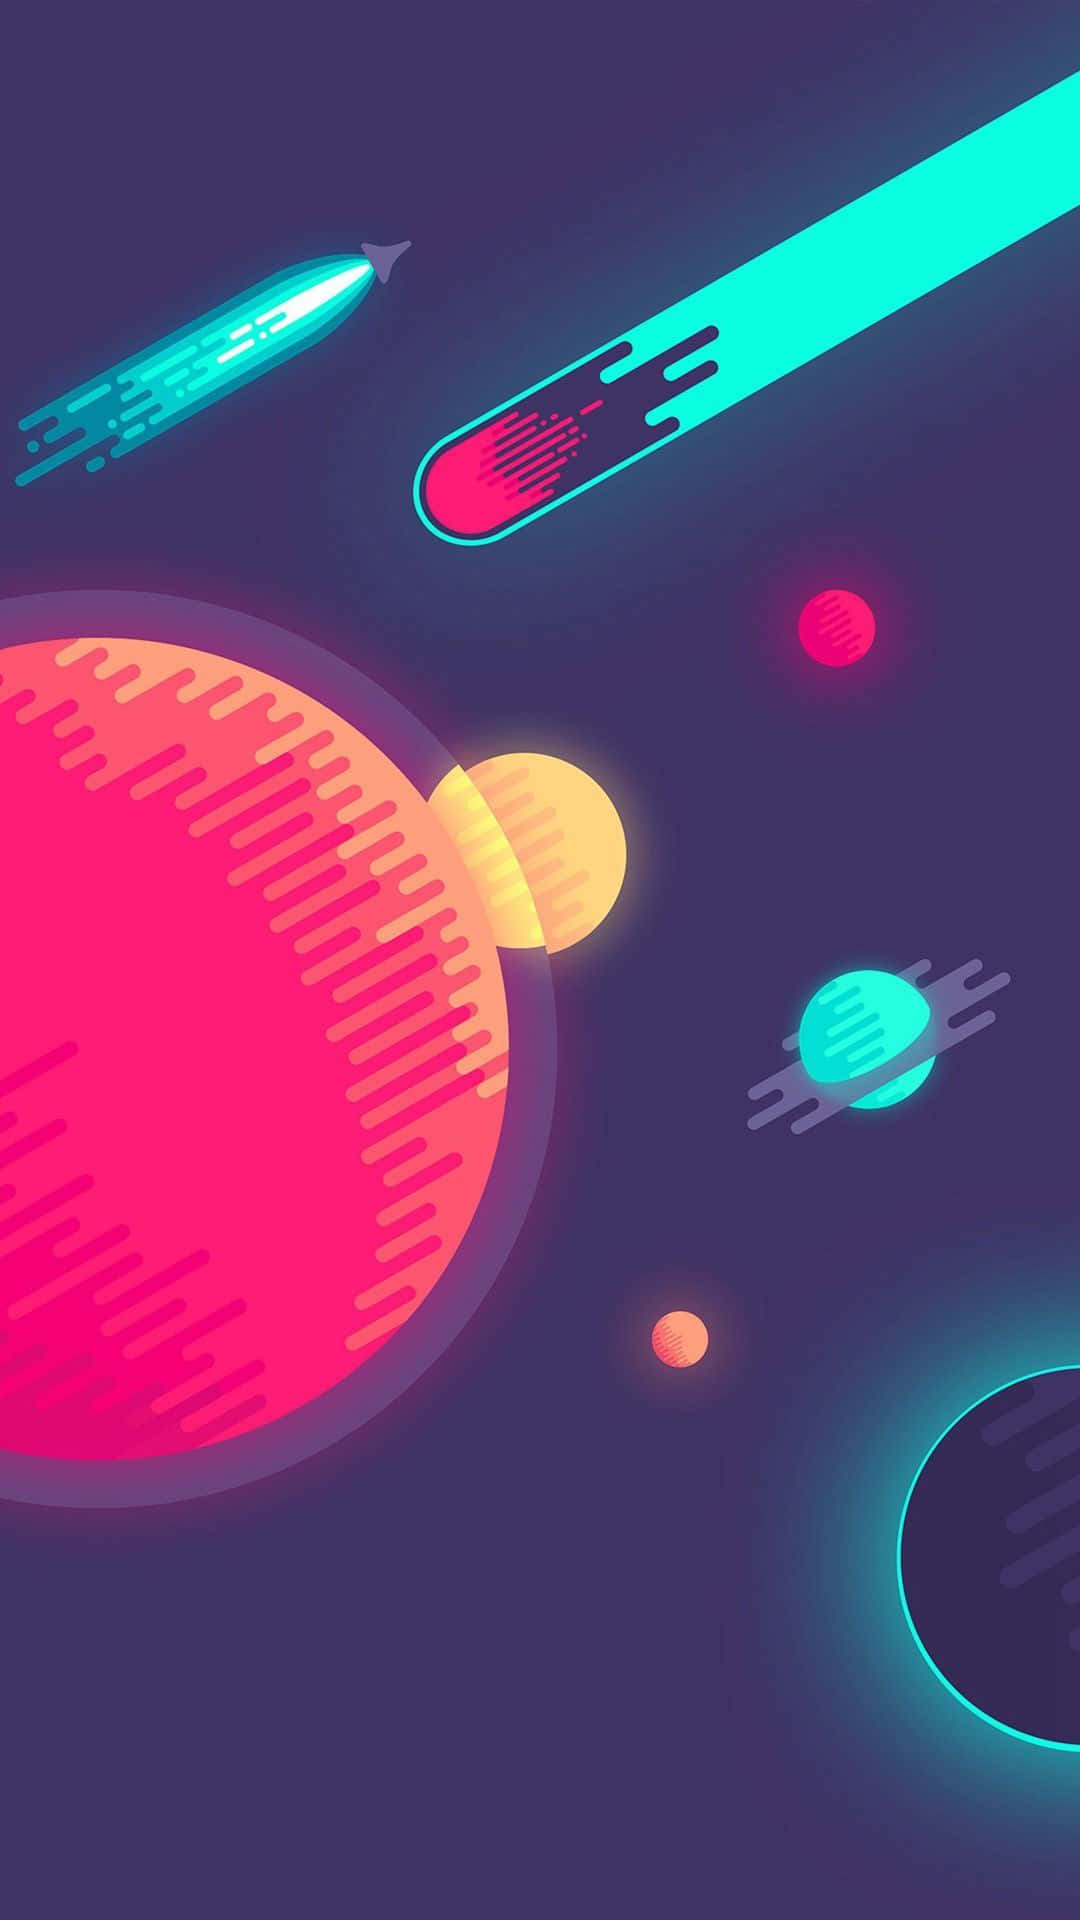 Minimalistaiphone X Planetas Coloridos De La Galaxia Fondo de pantalla